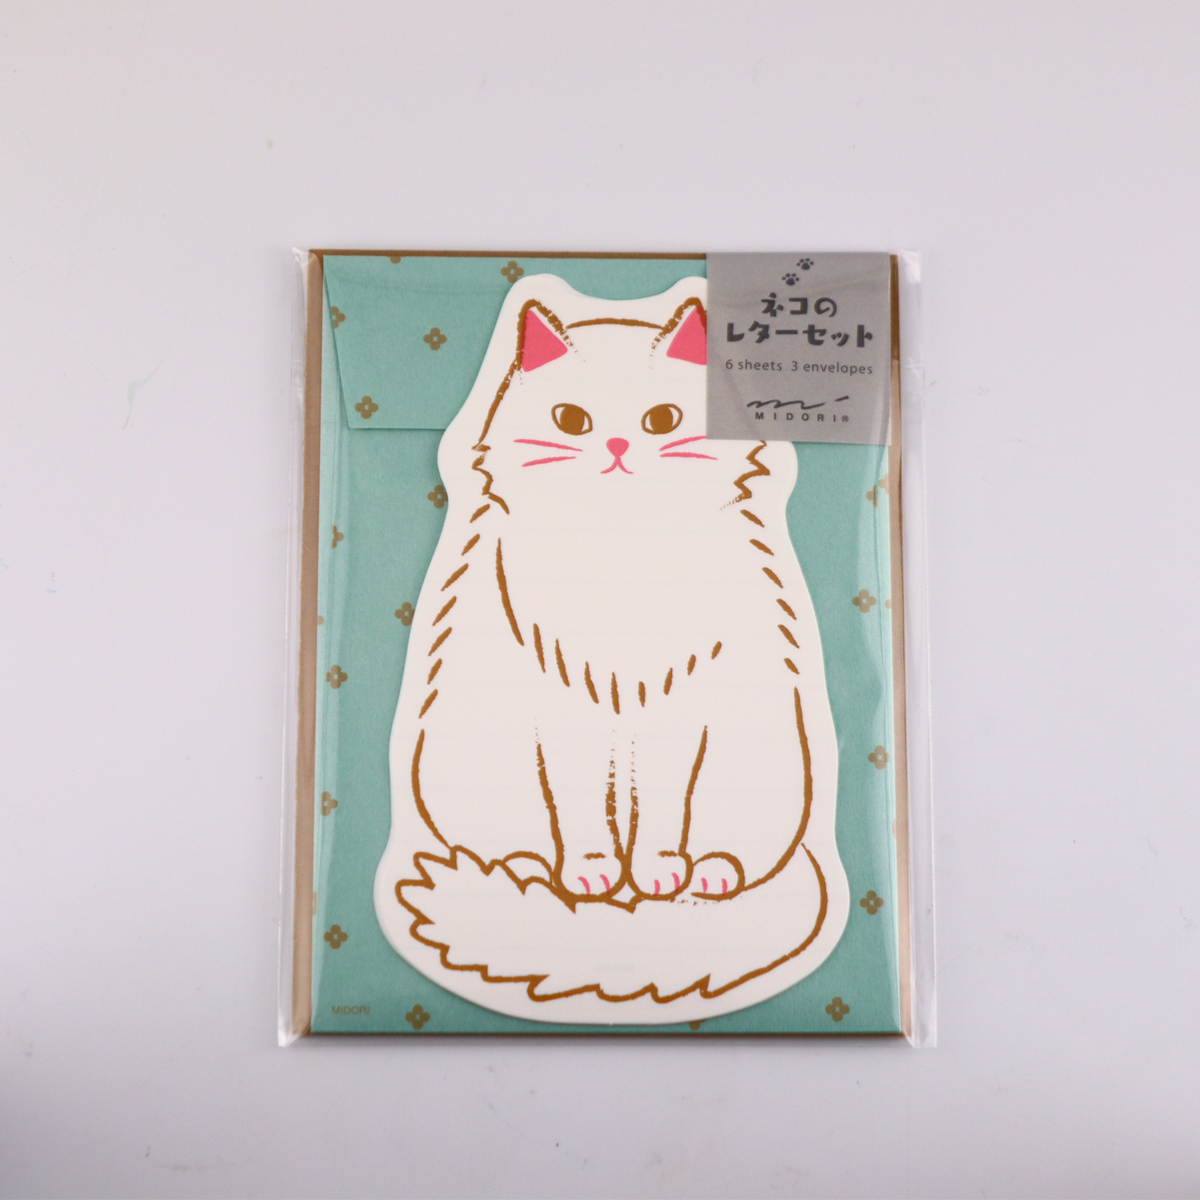 Midori Letter Set (924) Die-Cut Animal - Cat